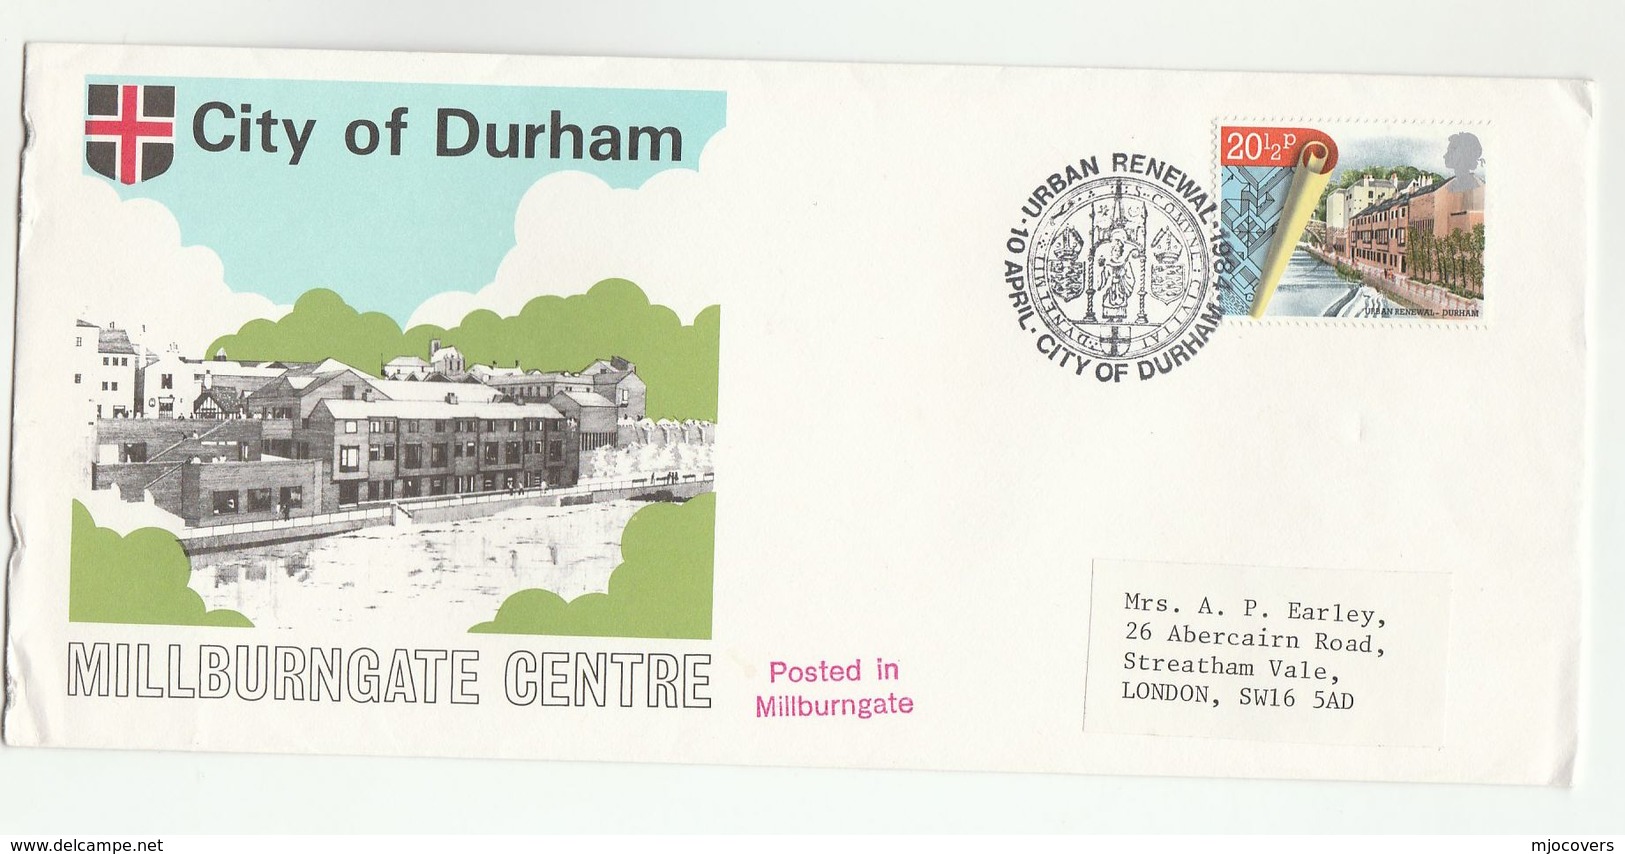 1984 MILLBURNGATE CENTRE City Of DURHAM EVENT COVER Urban Renewal Stamps FDC GB Heraldic Pmk - 1981-1990 Decimal Issues